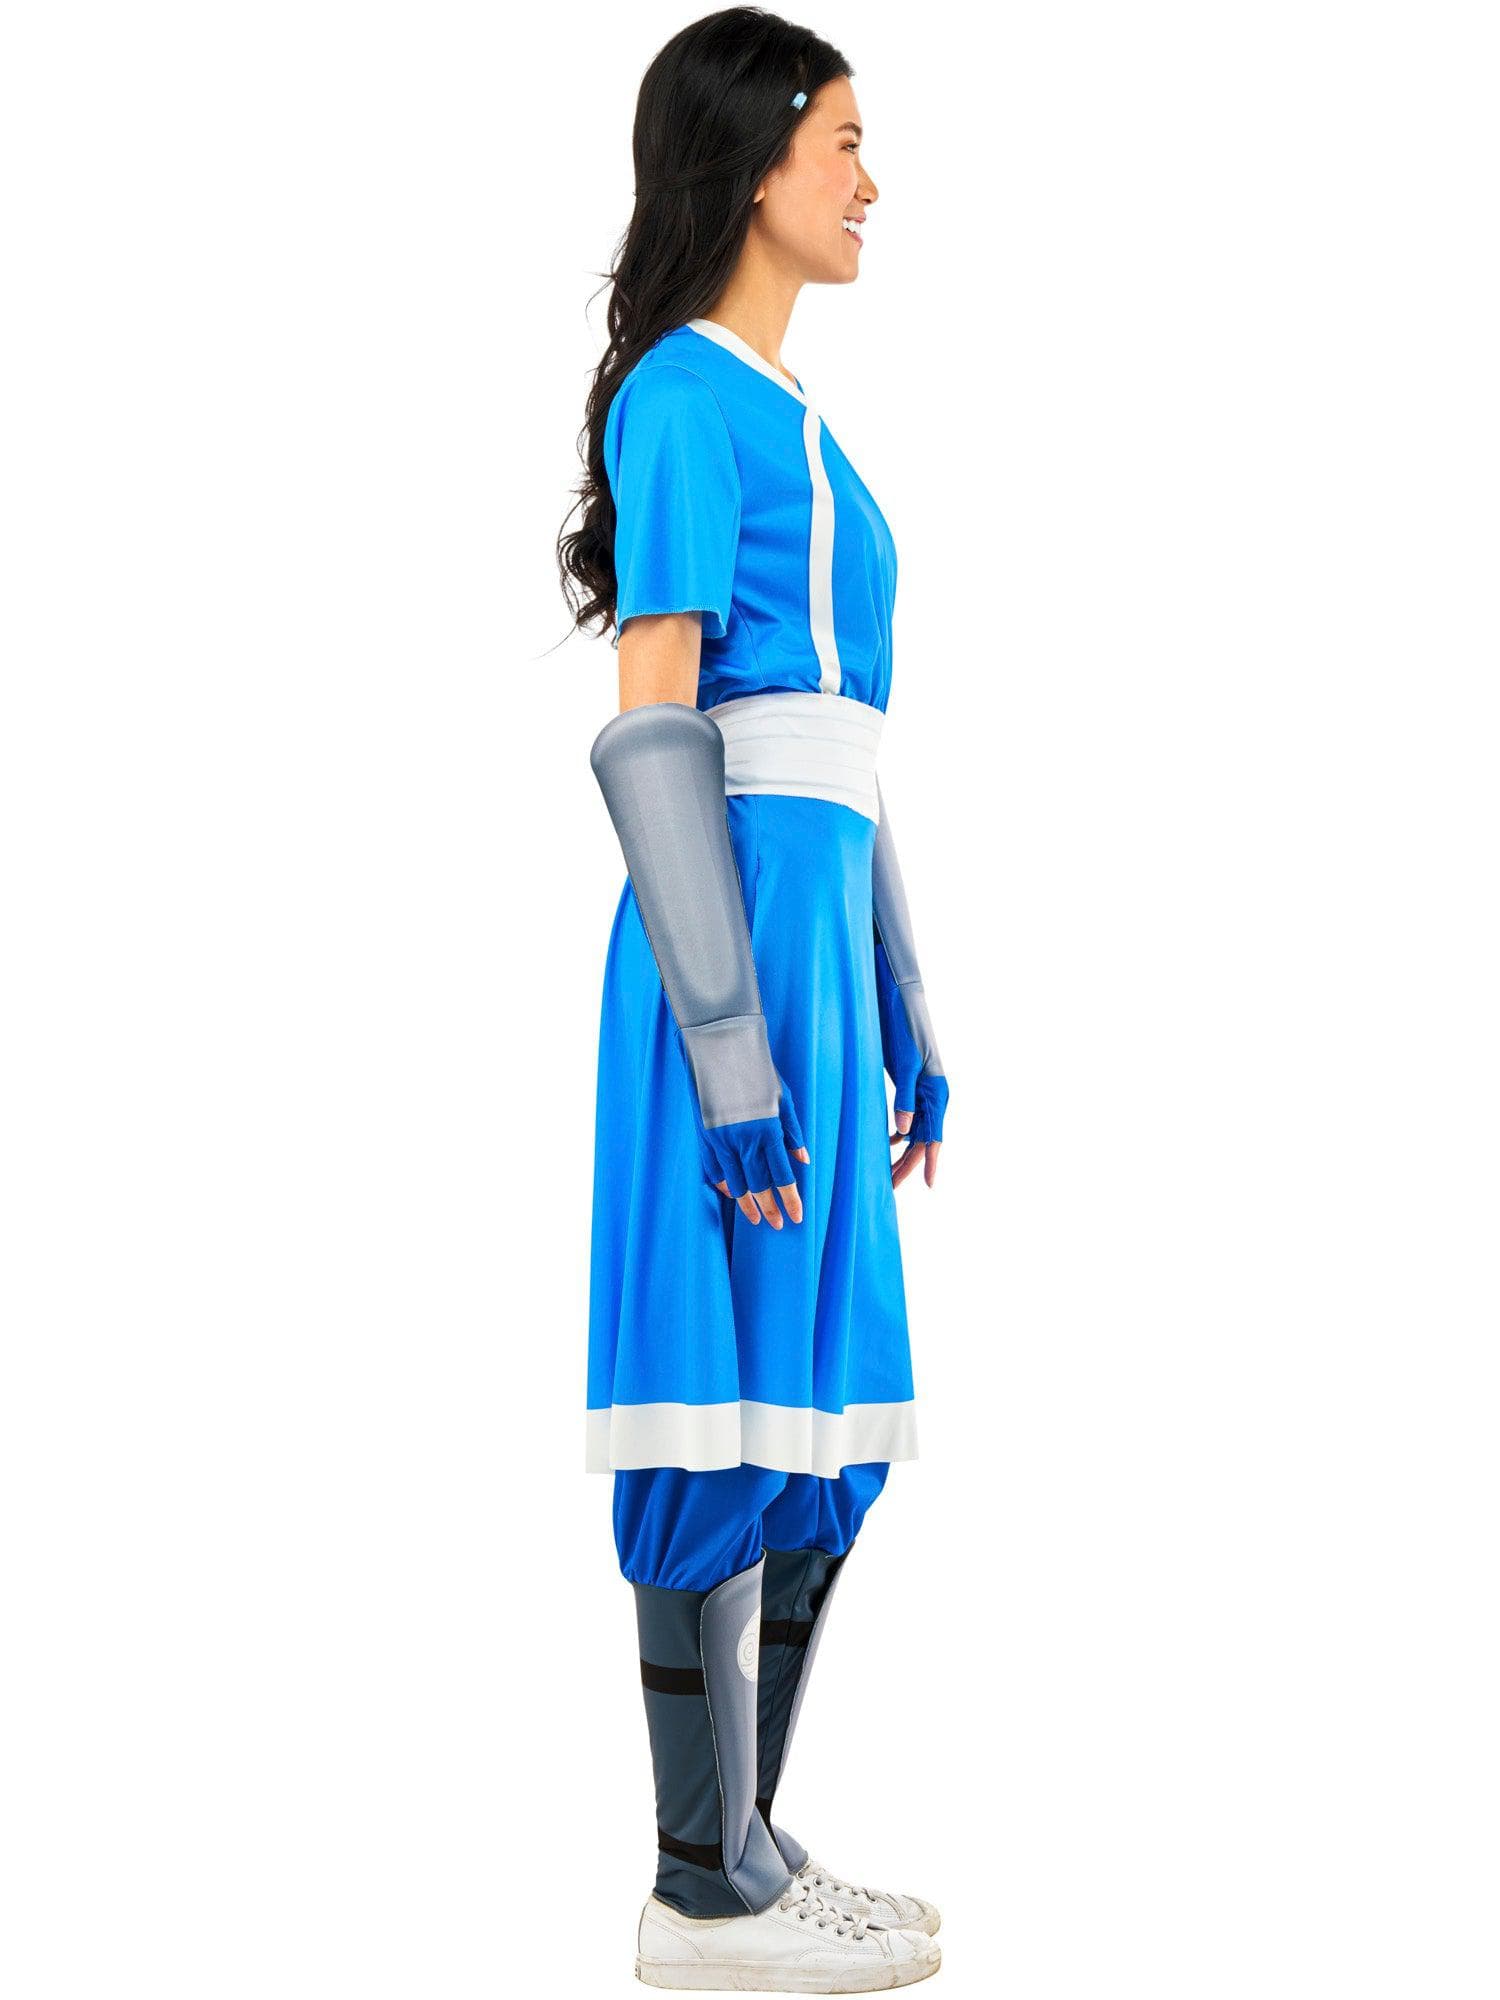 Women's Avatar: The Last Airbender Katara Costume - costumes.com